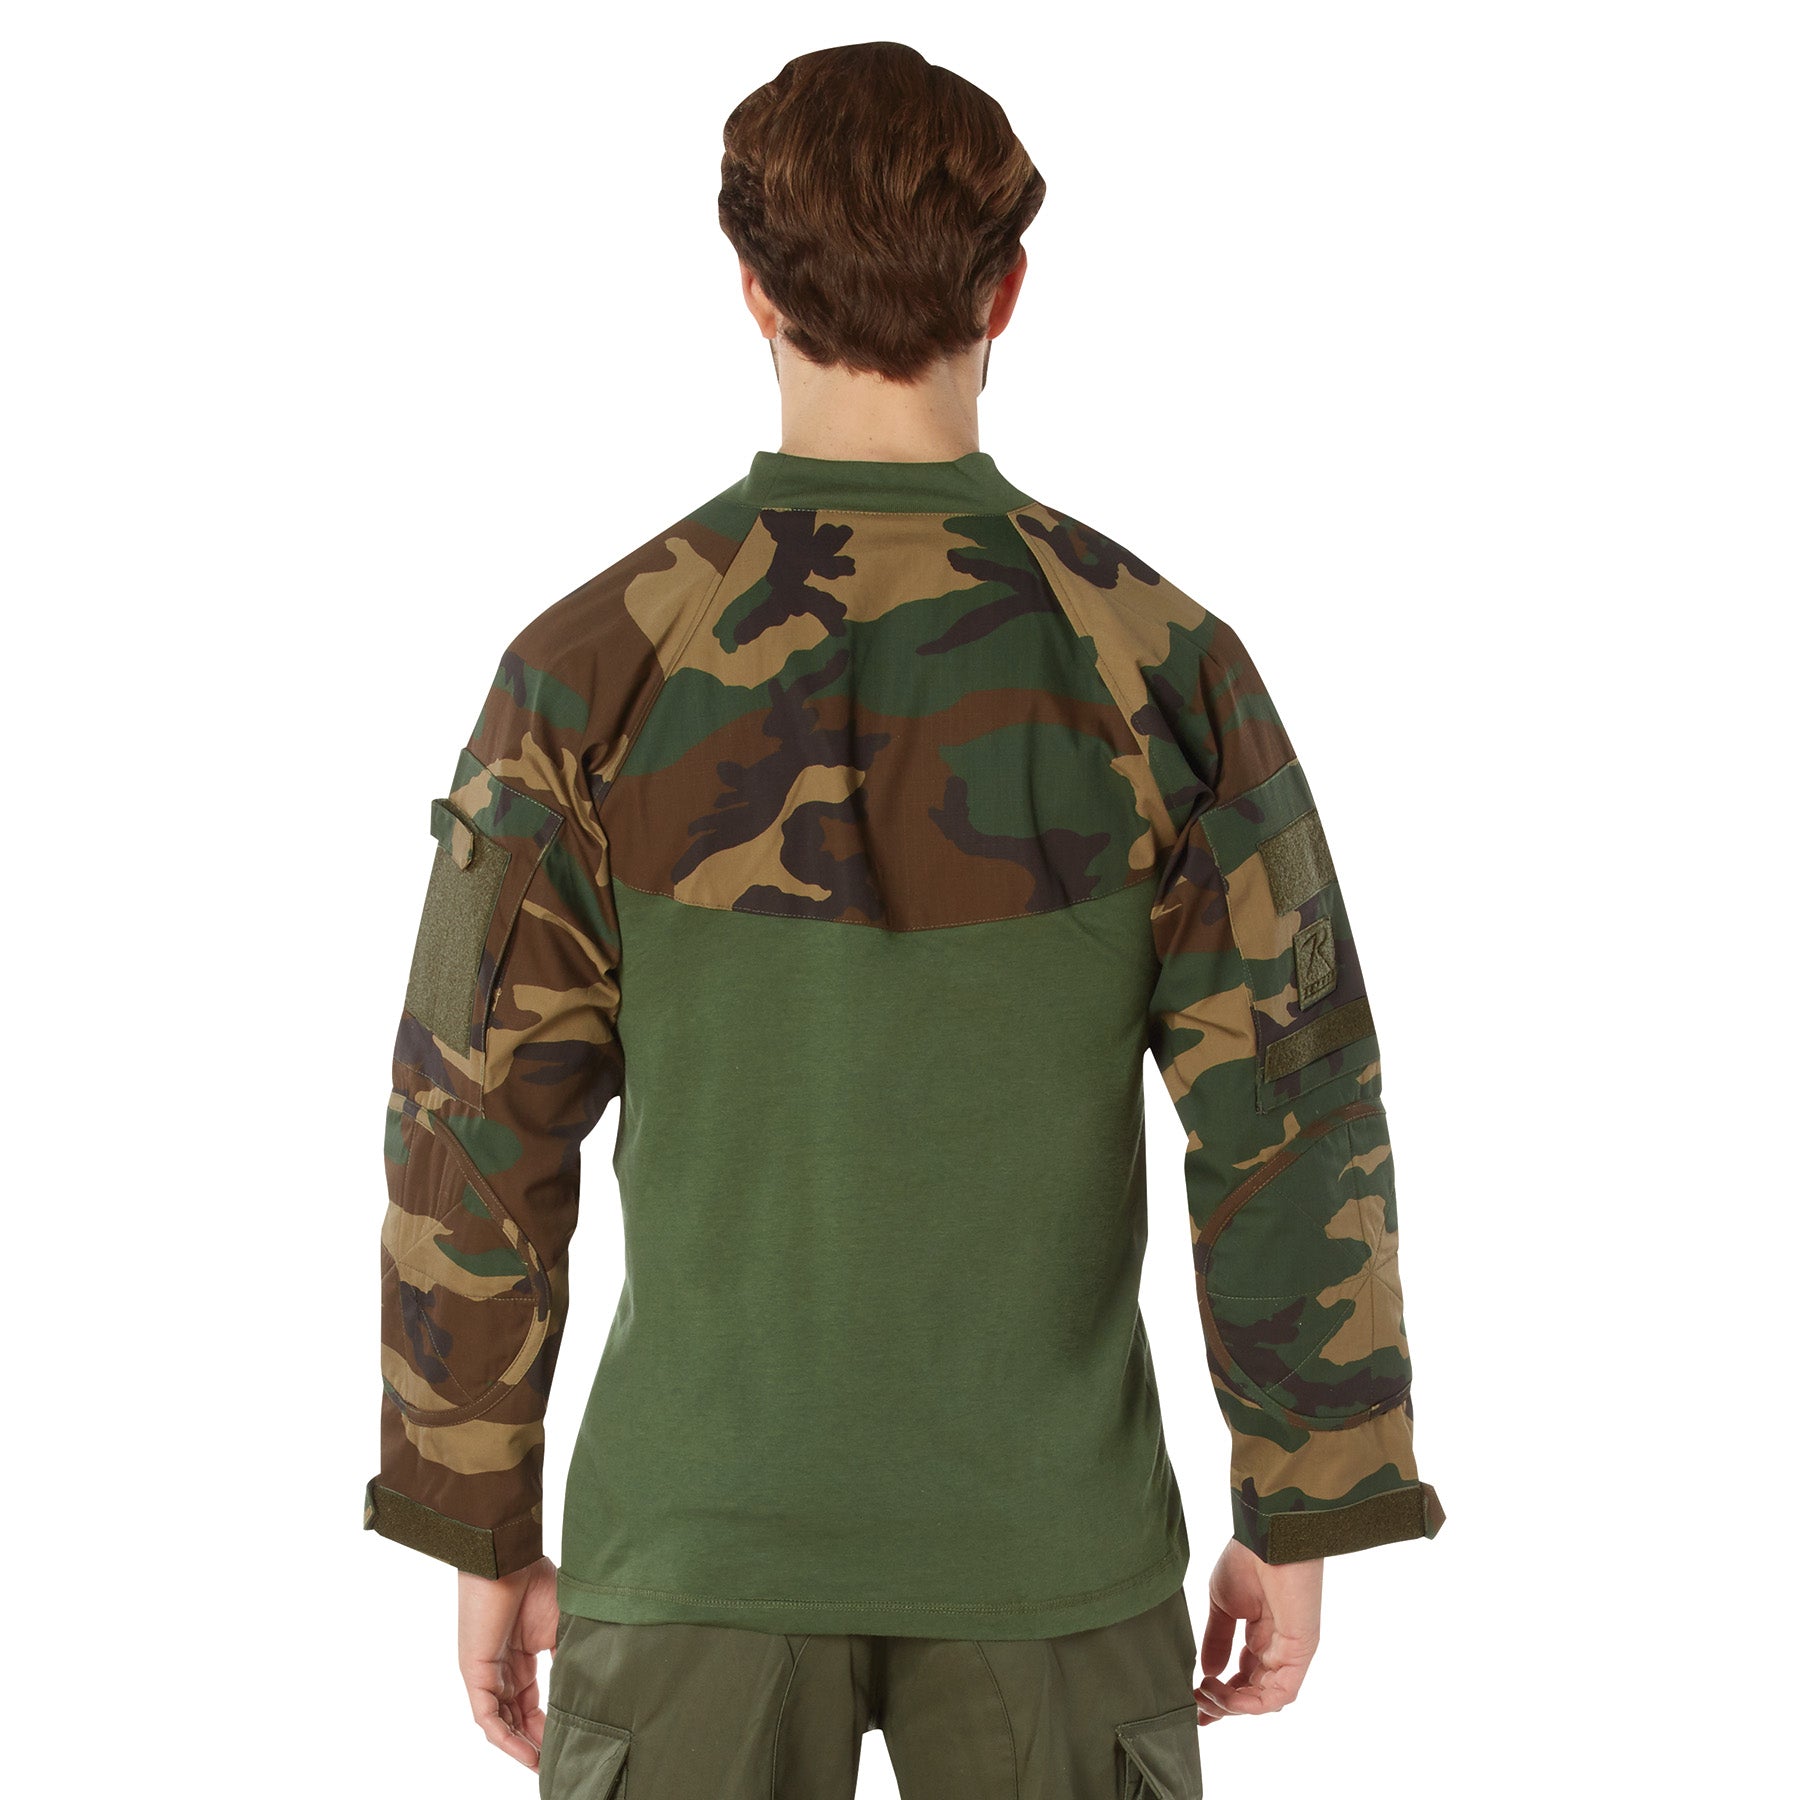 [Military][Fire Retardant] Camo Acrylic/Cotton/Nylon/Cotton Combat Shirts